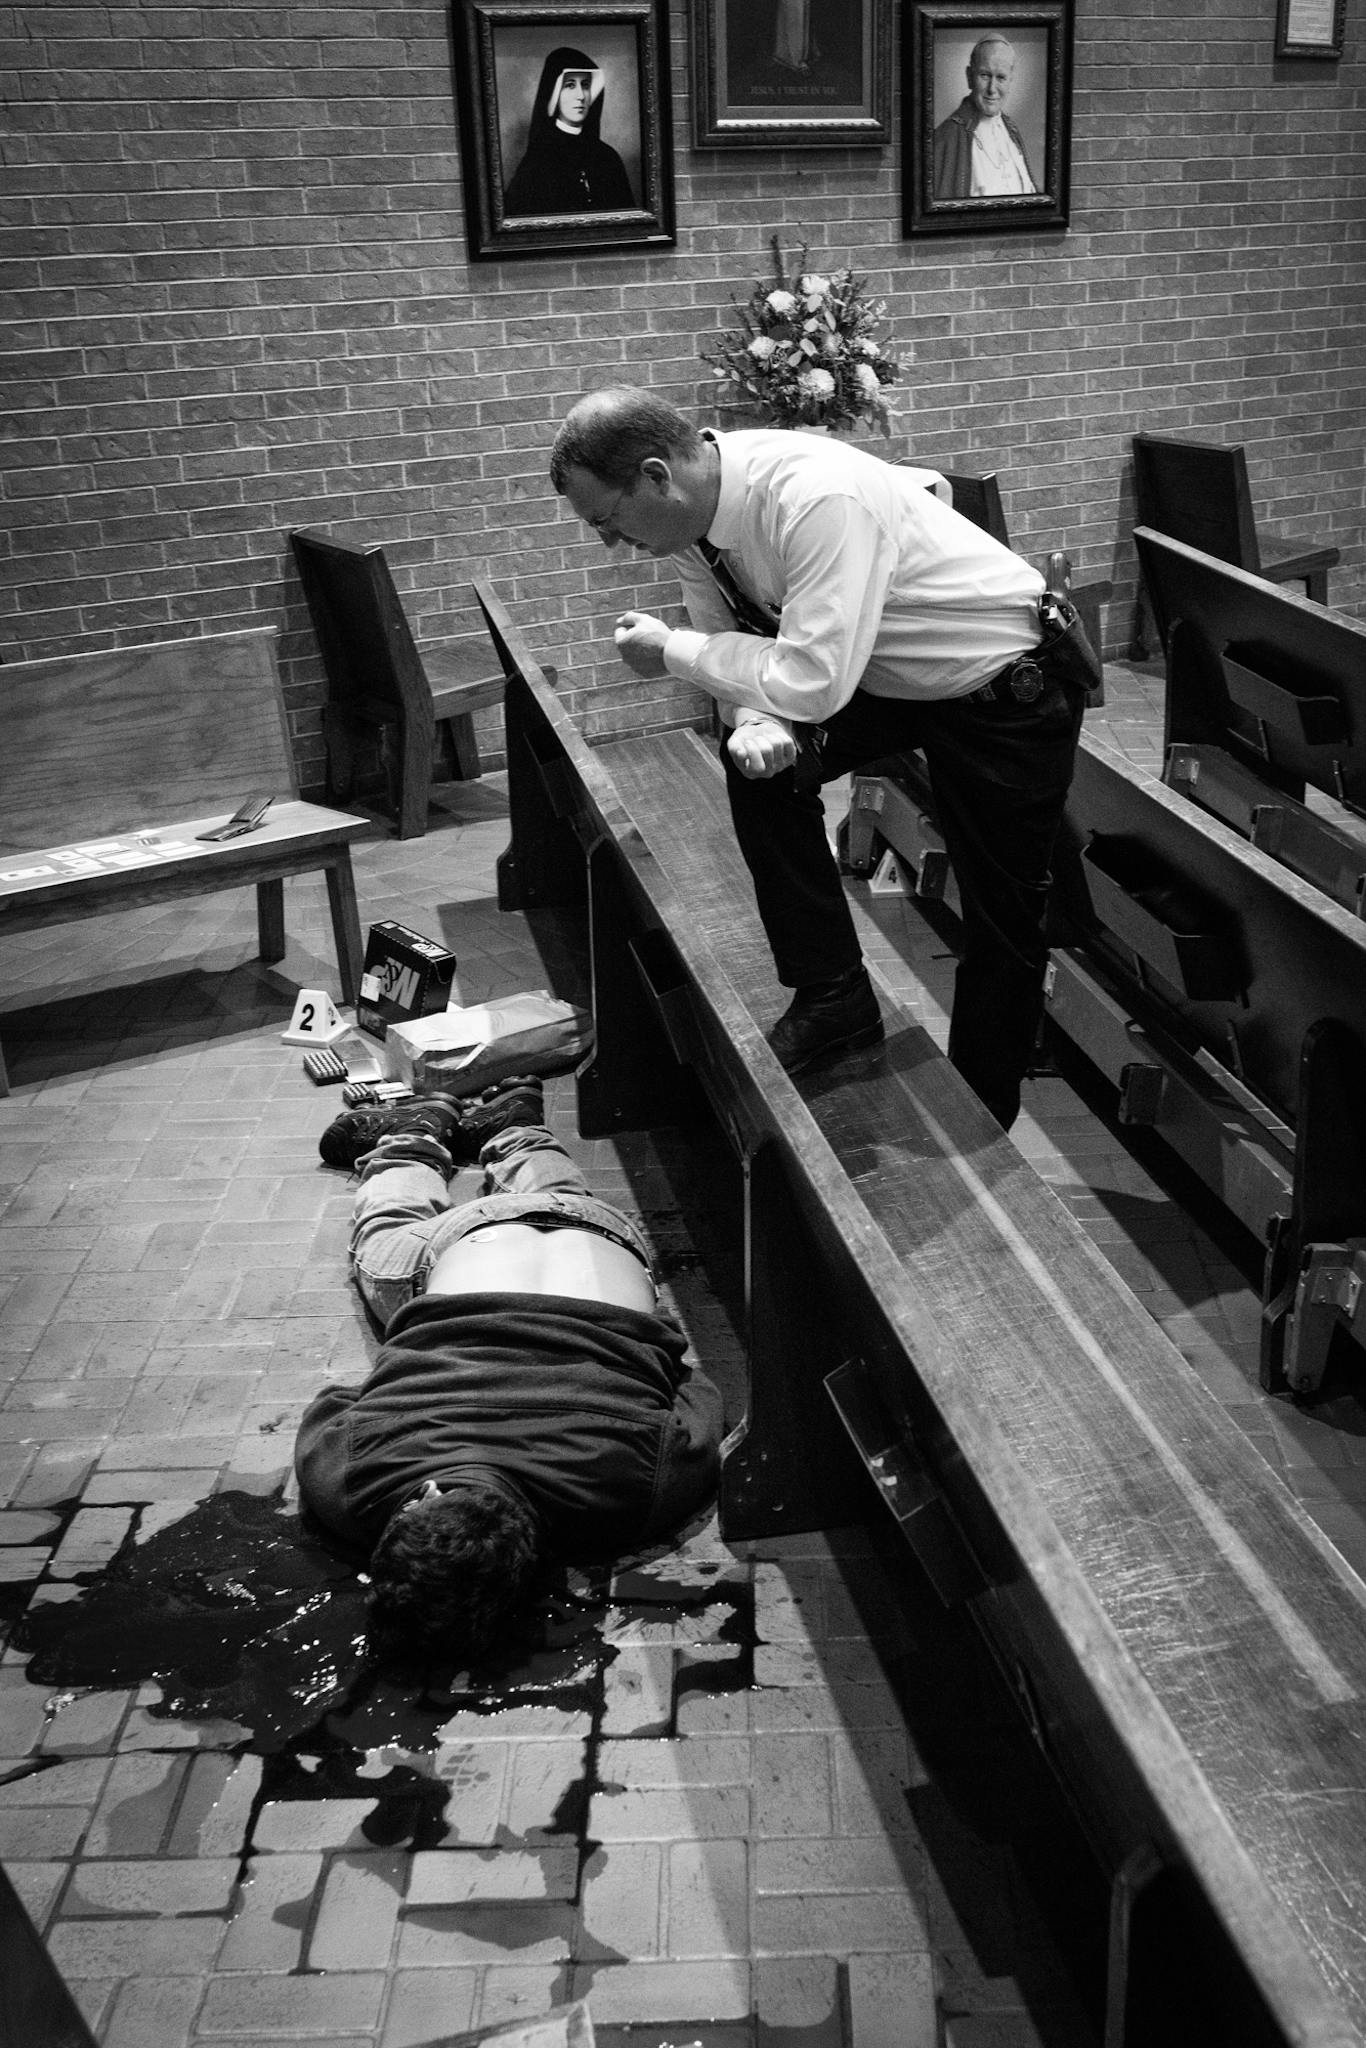 Curtis with a gunshot victim inside a church.